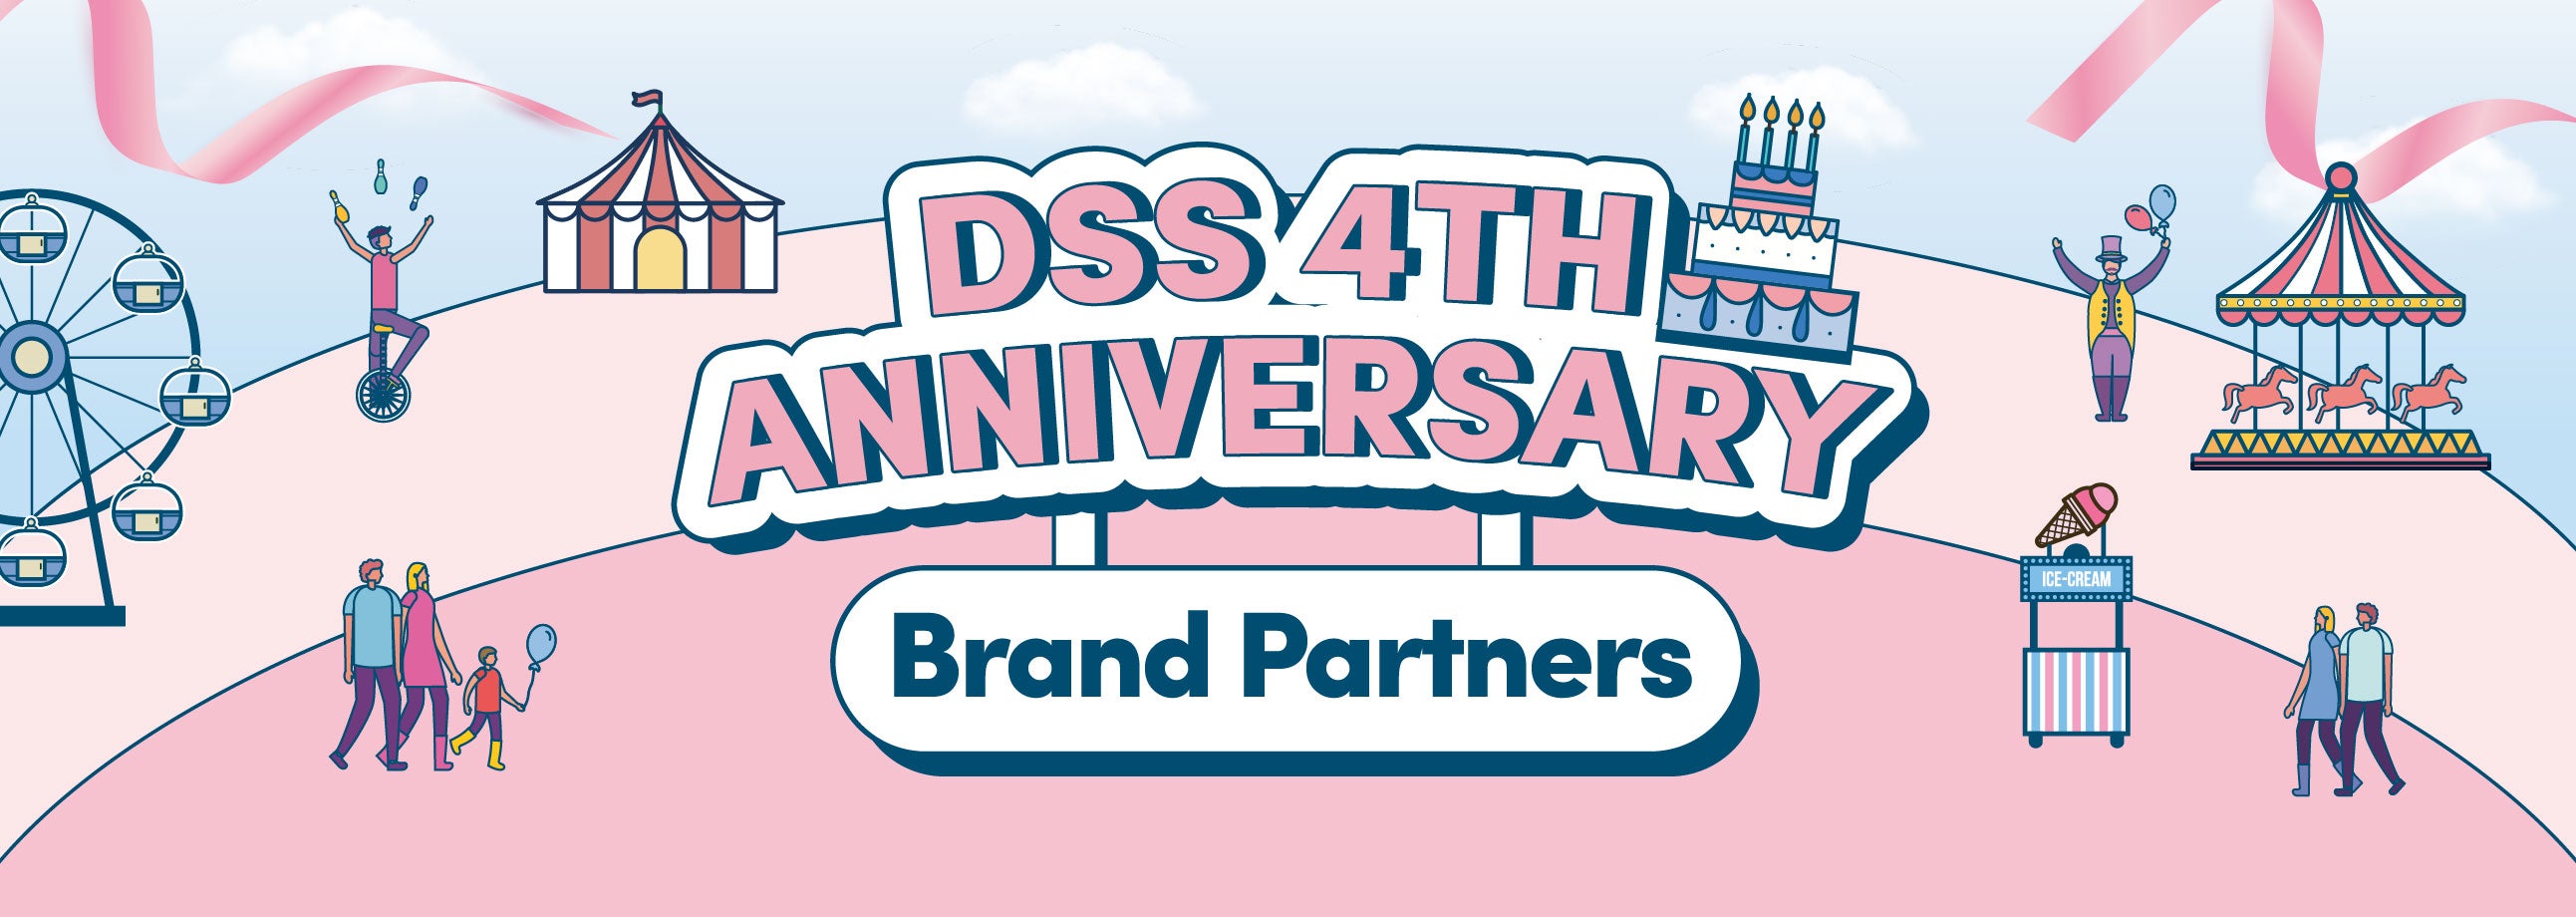 Dermaskinshop Anniversary | Brand Partners